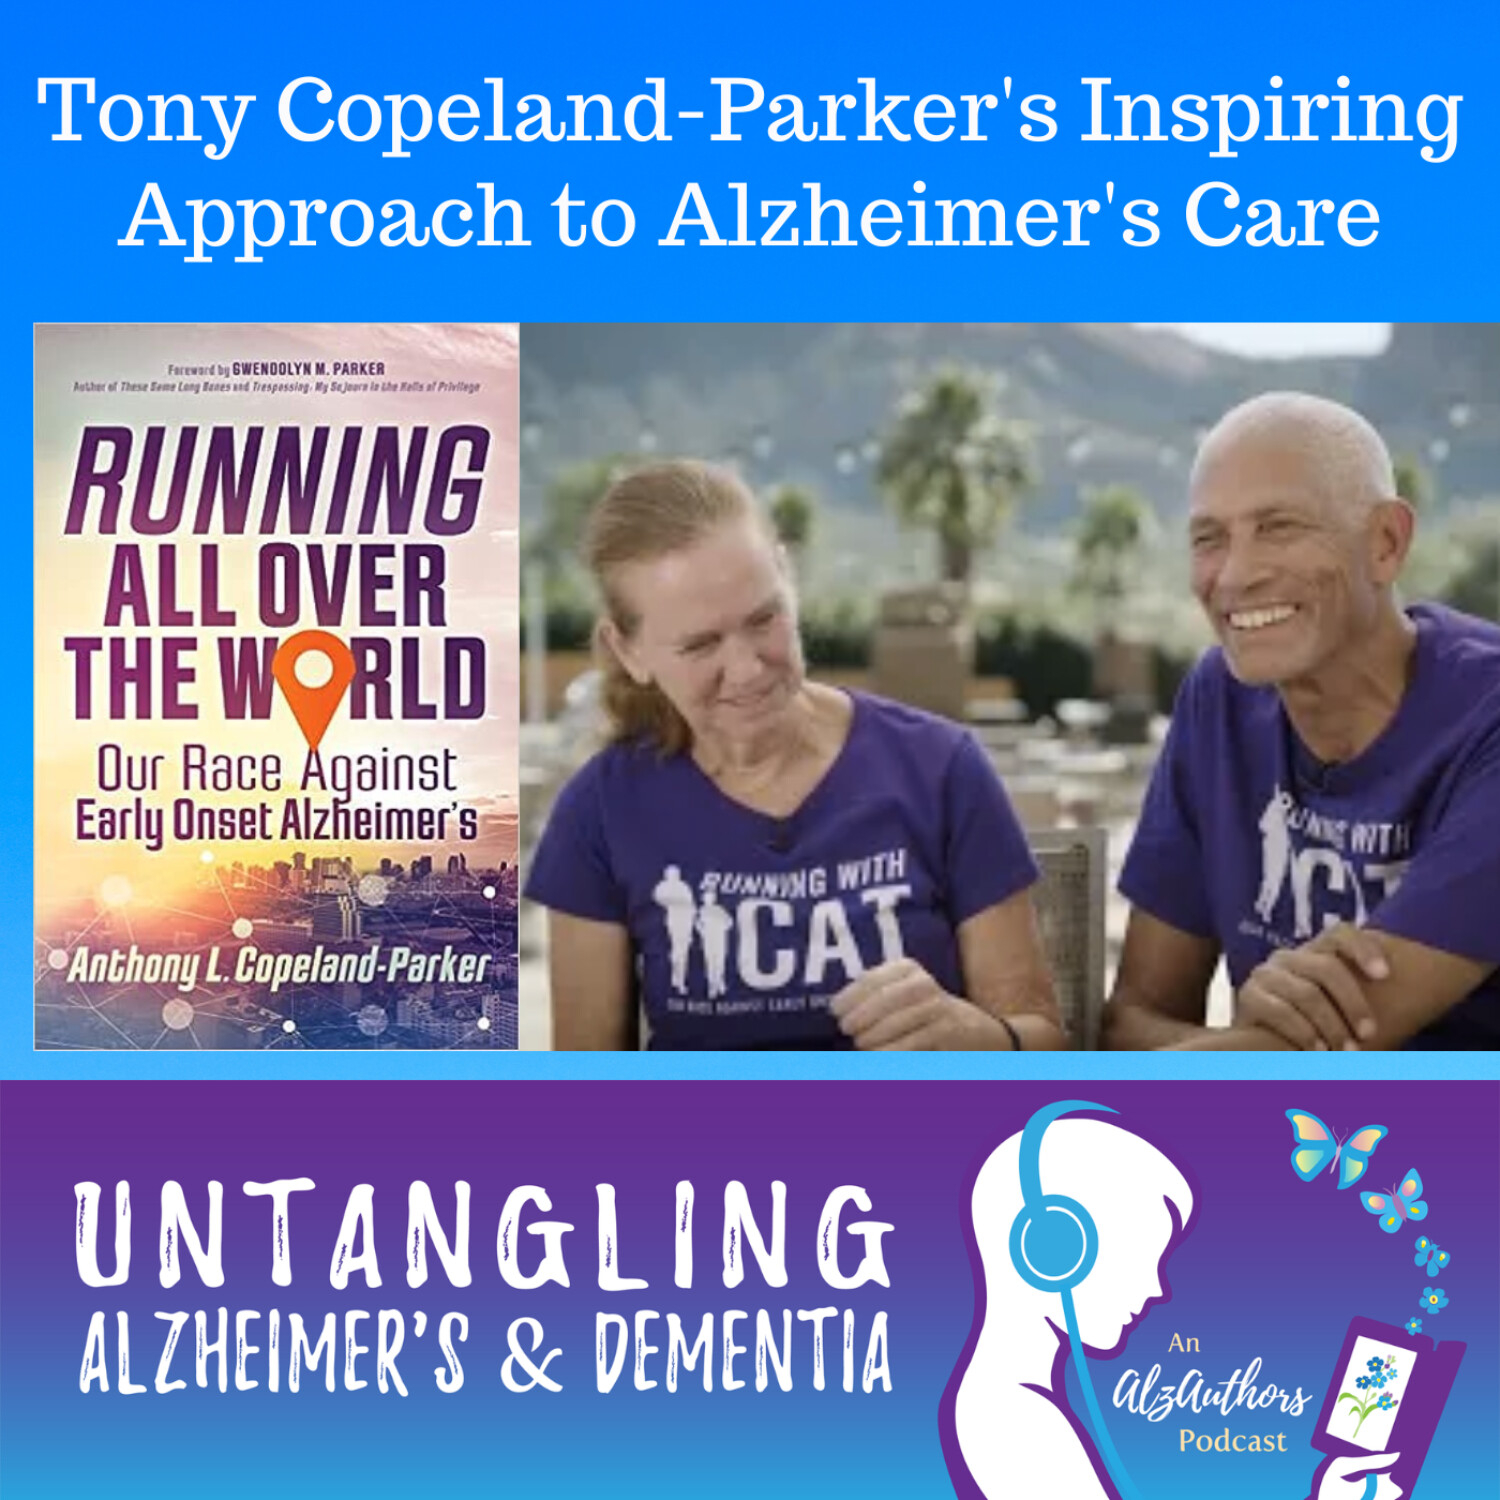 Tony Copeland-Parker’s Inspiring Approach to Alzheimer’s Care